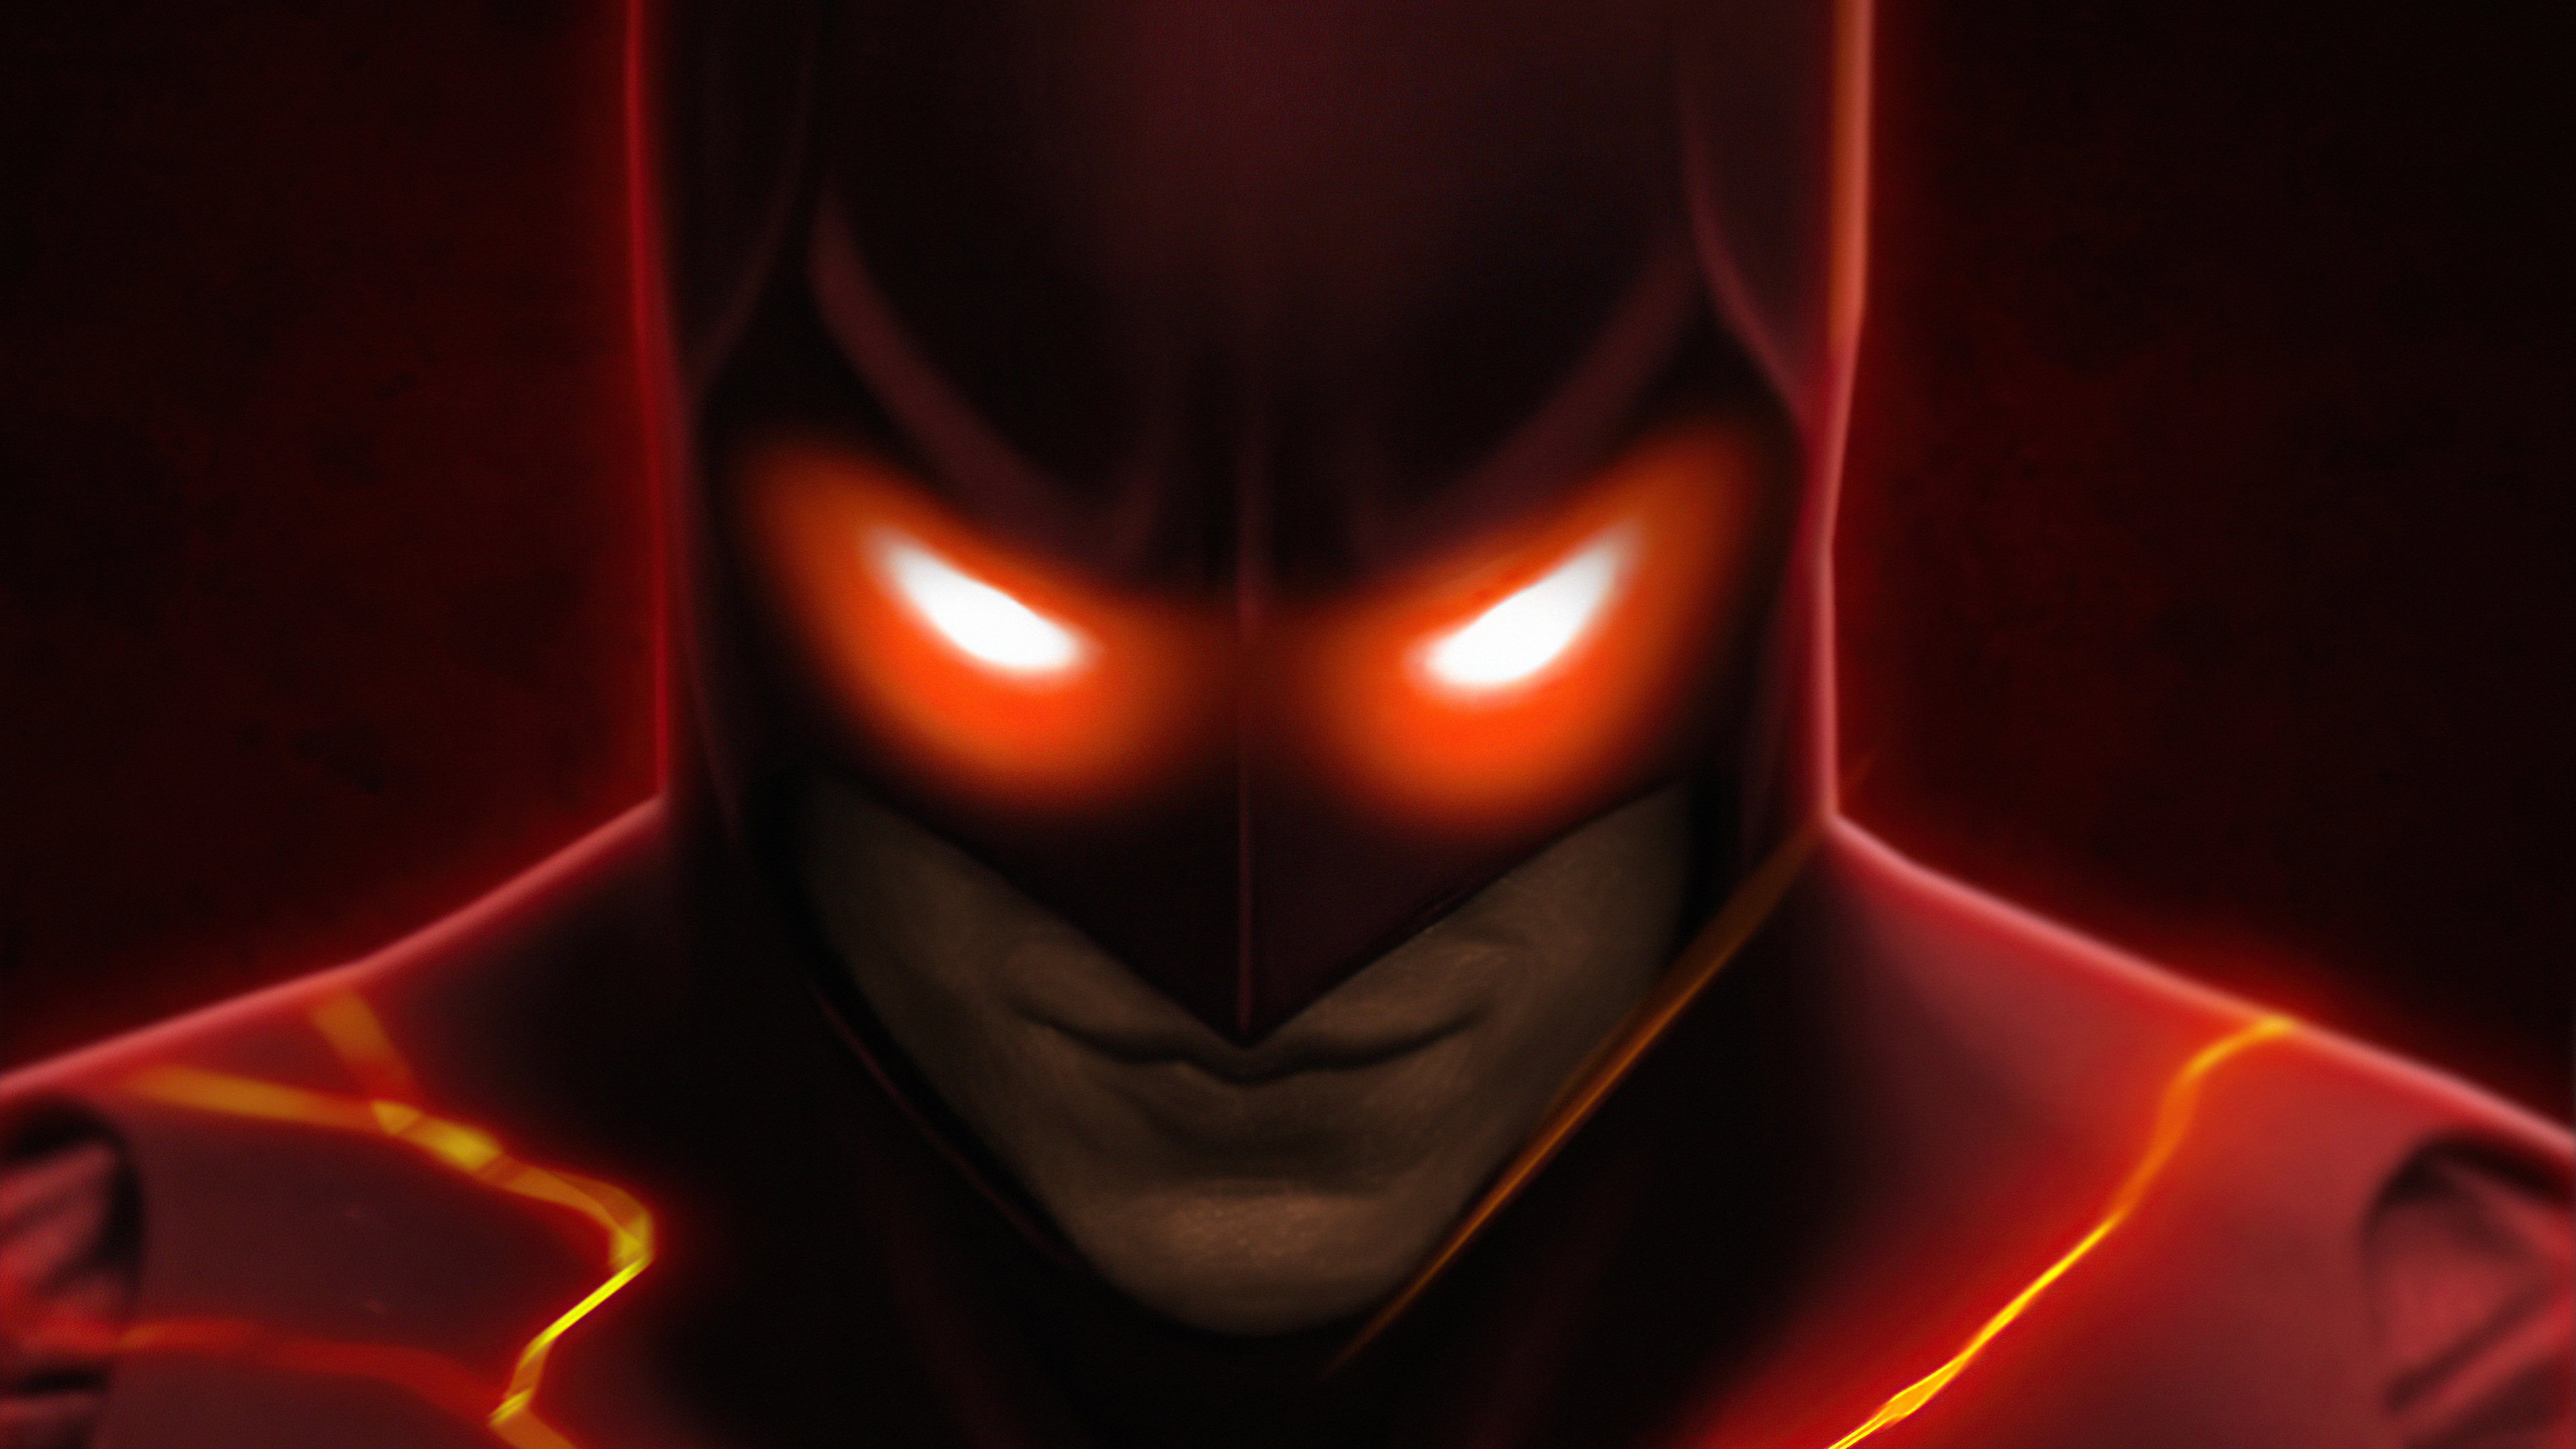 Descarga gratuita de fondo de pantalla para móvil de Historietas, Superhéroe, Dc Comics, The Flash.